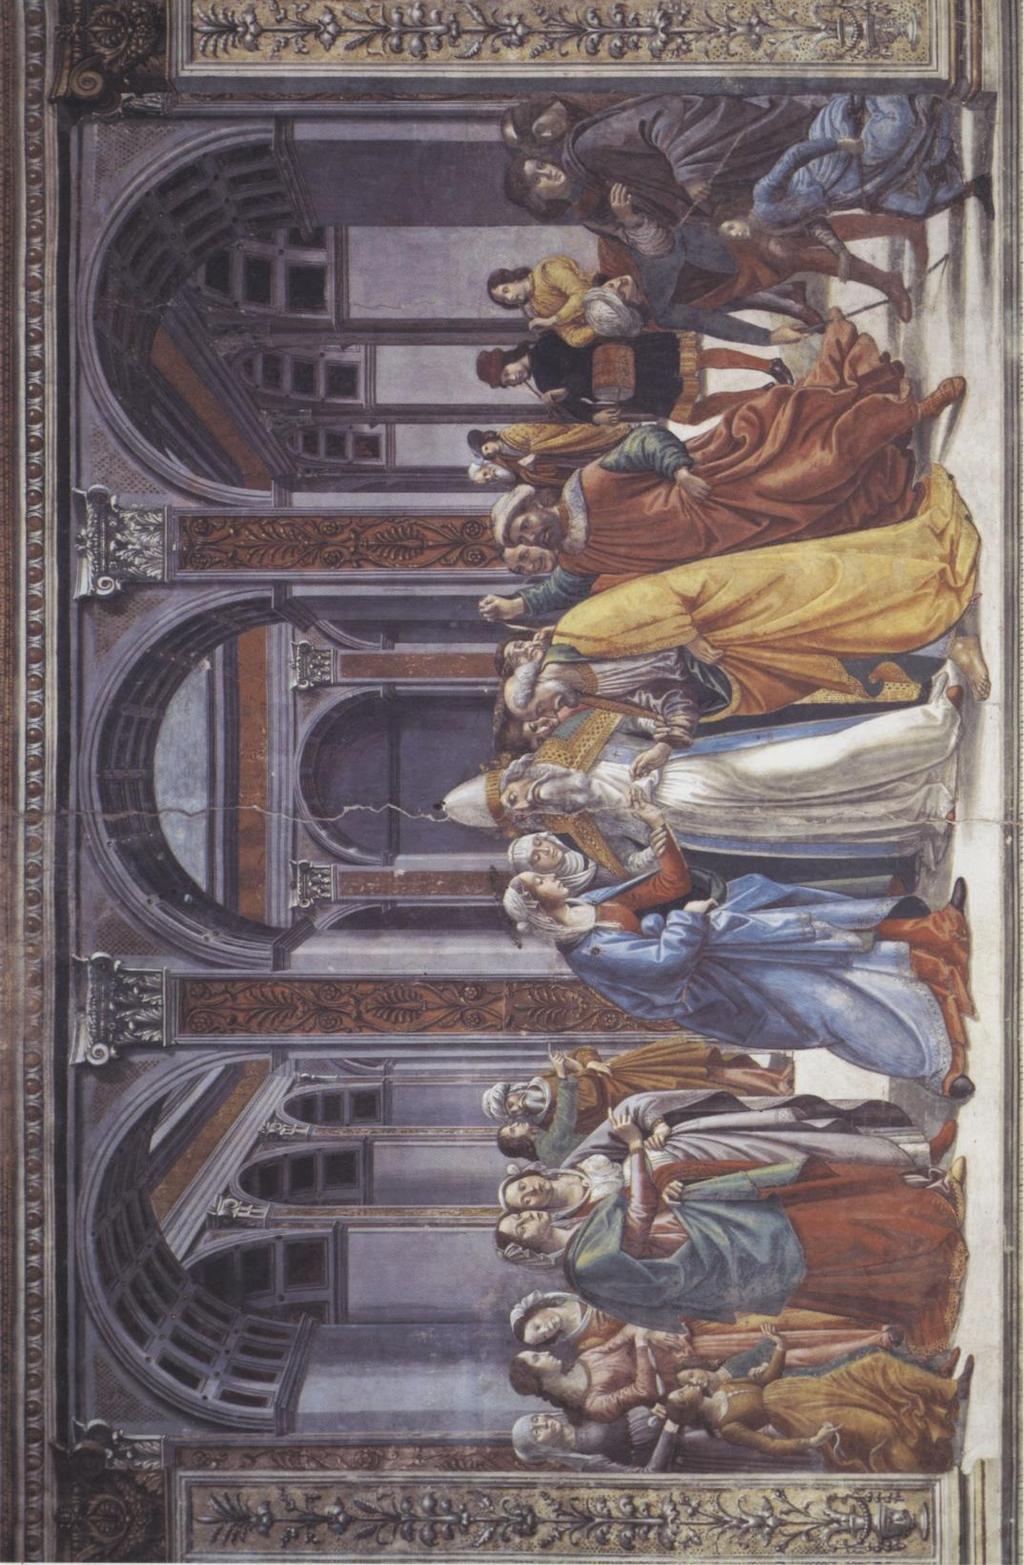 Plate 27: Domenico Bigordi called Ghirlandaio, and workshop, Marriage of the Virgin,